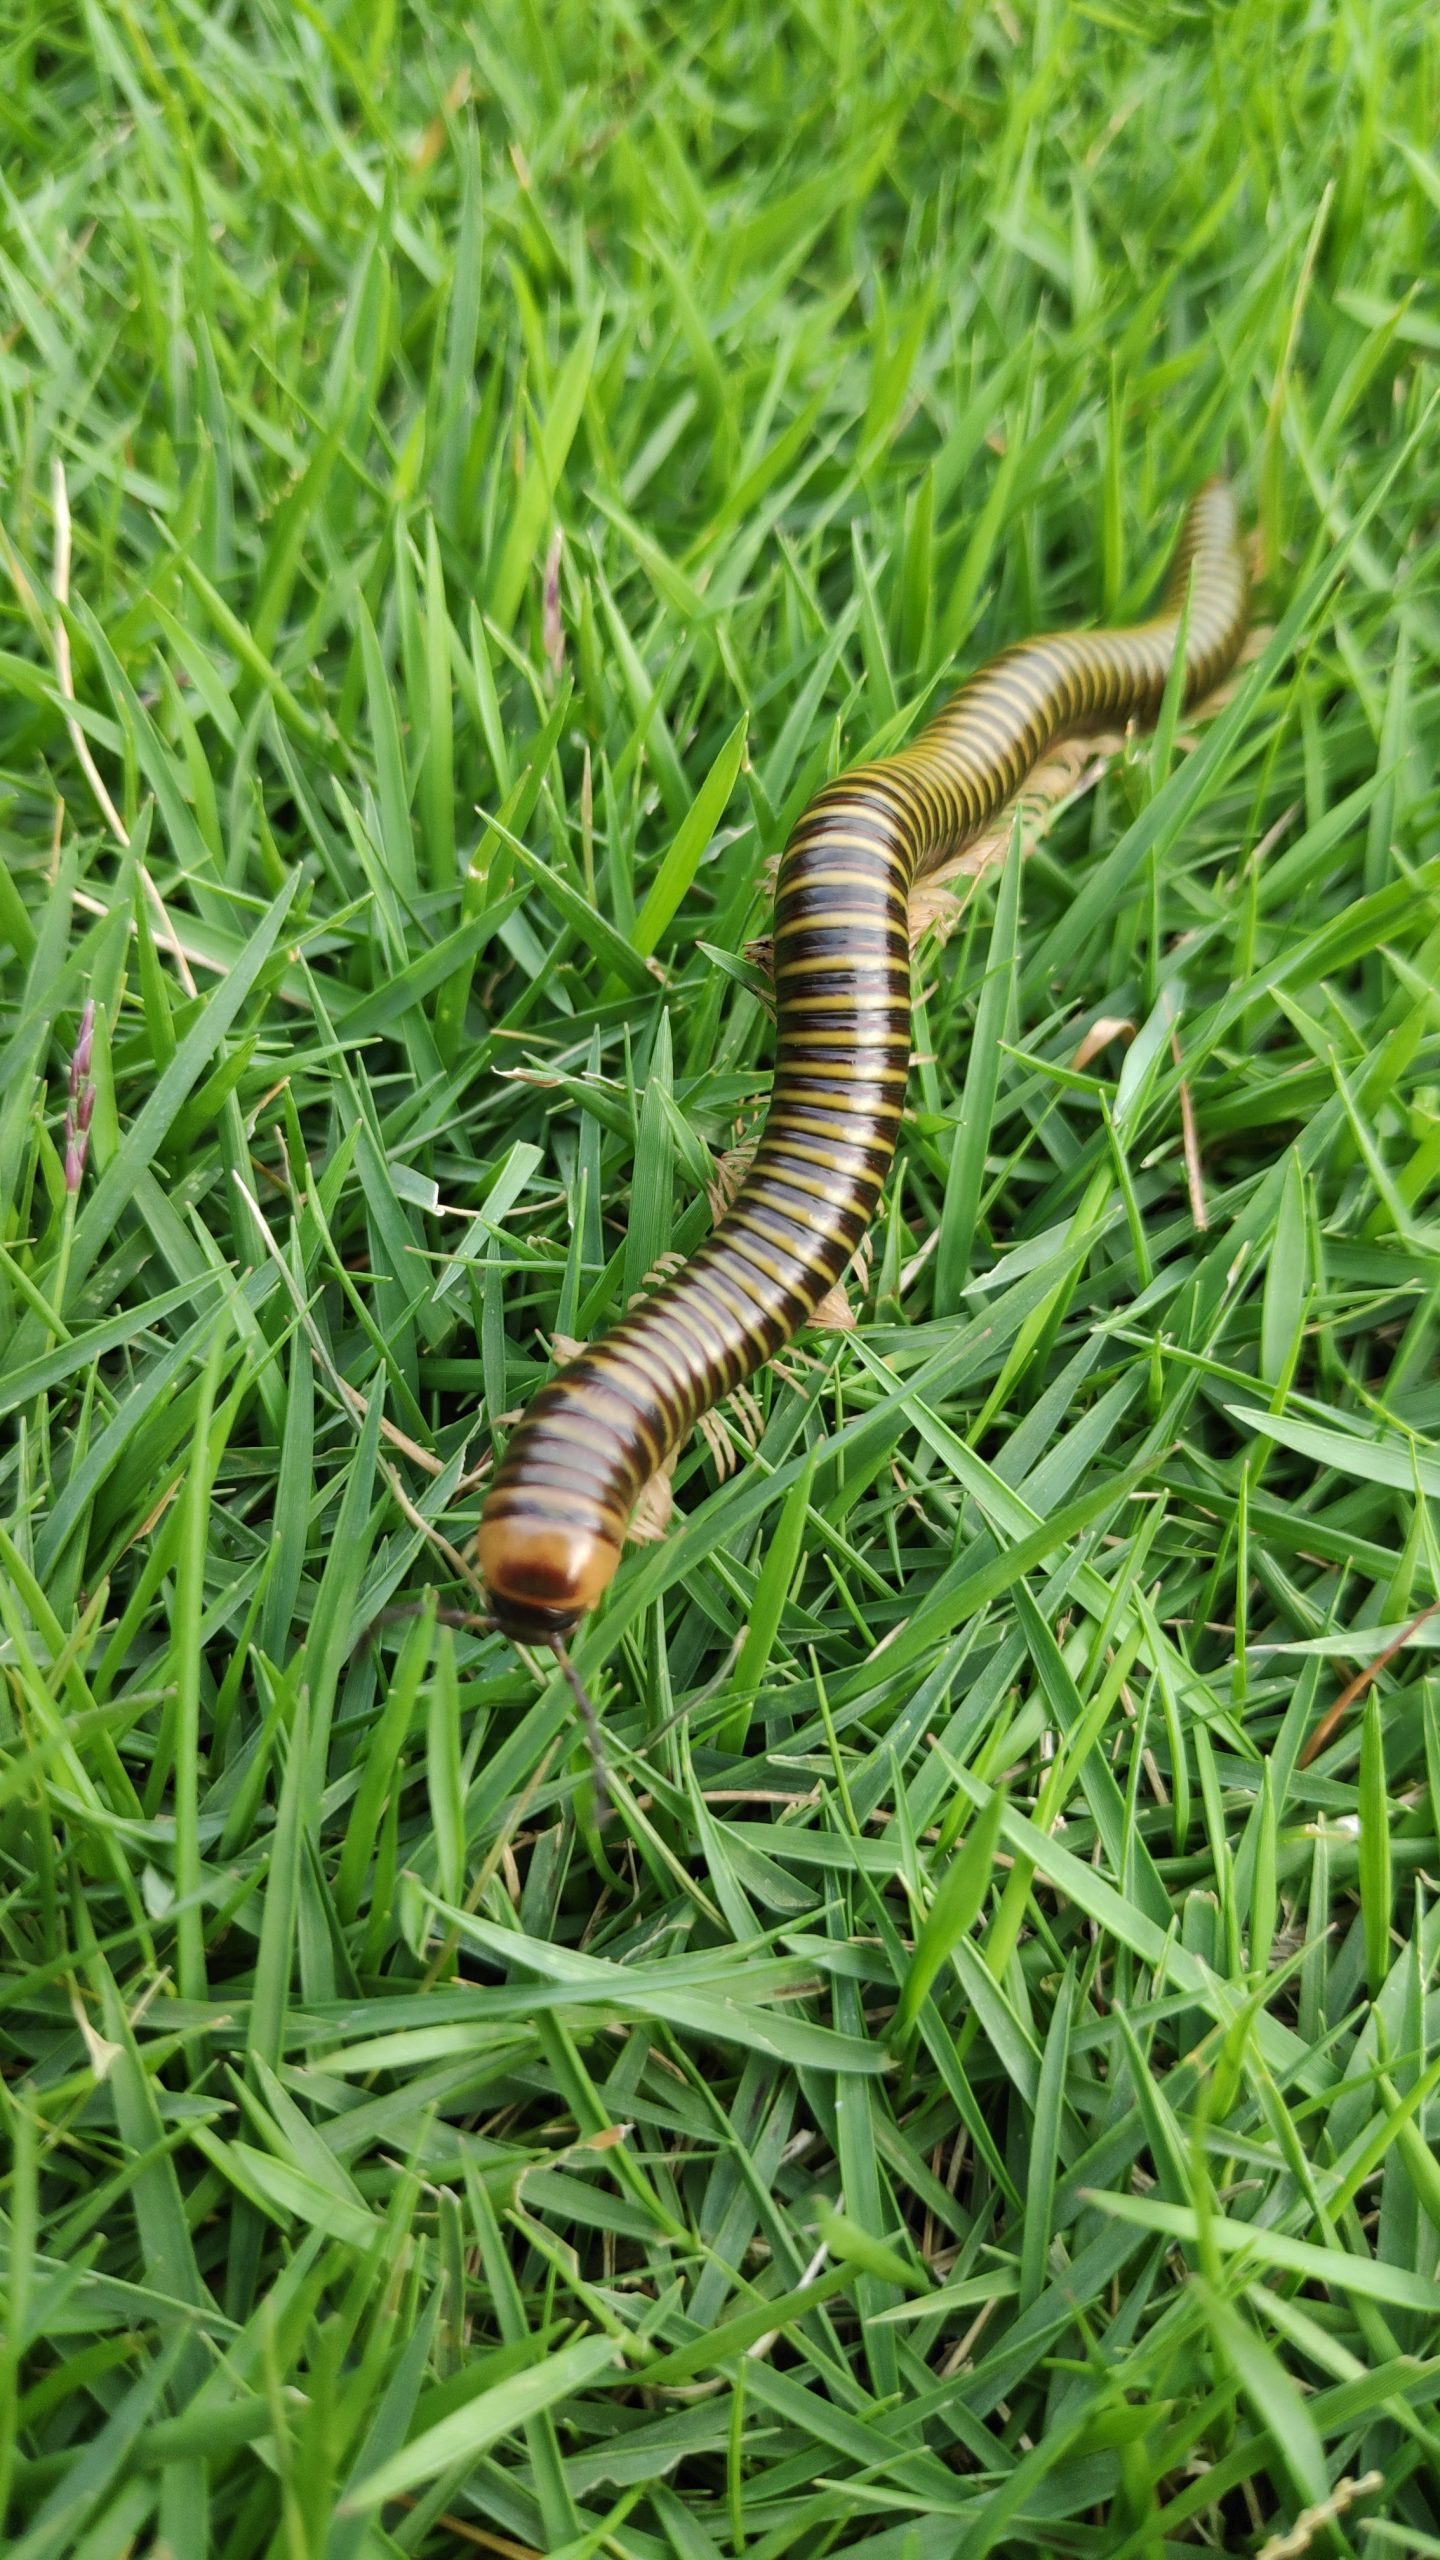 A worm on grass